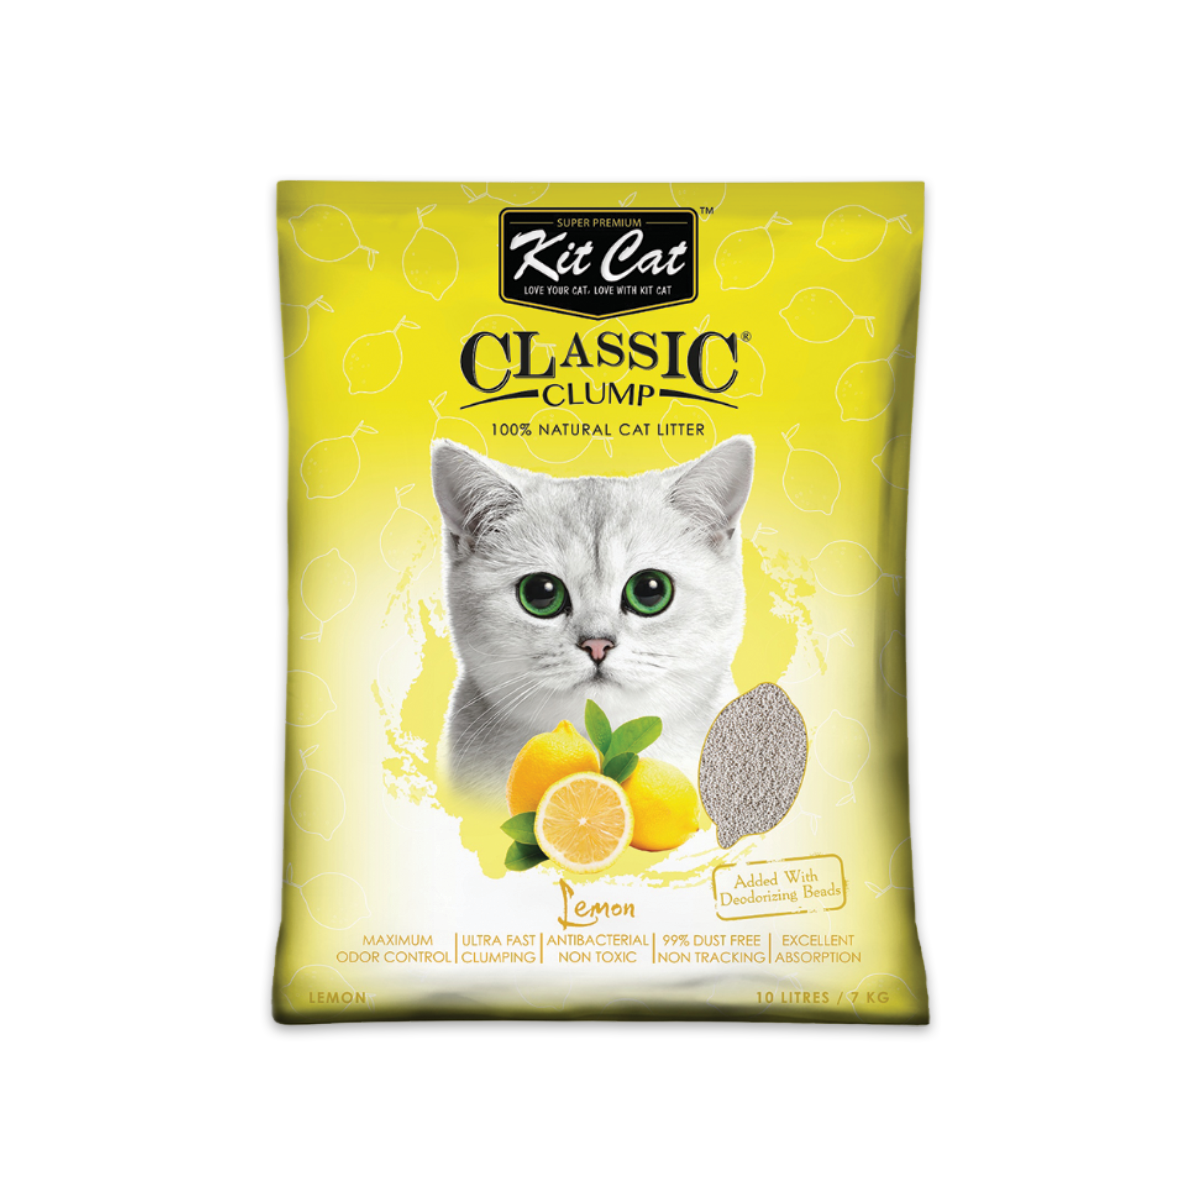 Kit Cat คิต แคท ทรายแมวเบนโทไนต์ สูตร Lemon ขนาด 10 ลิตร